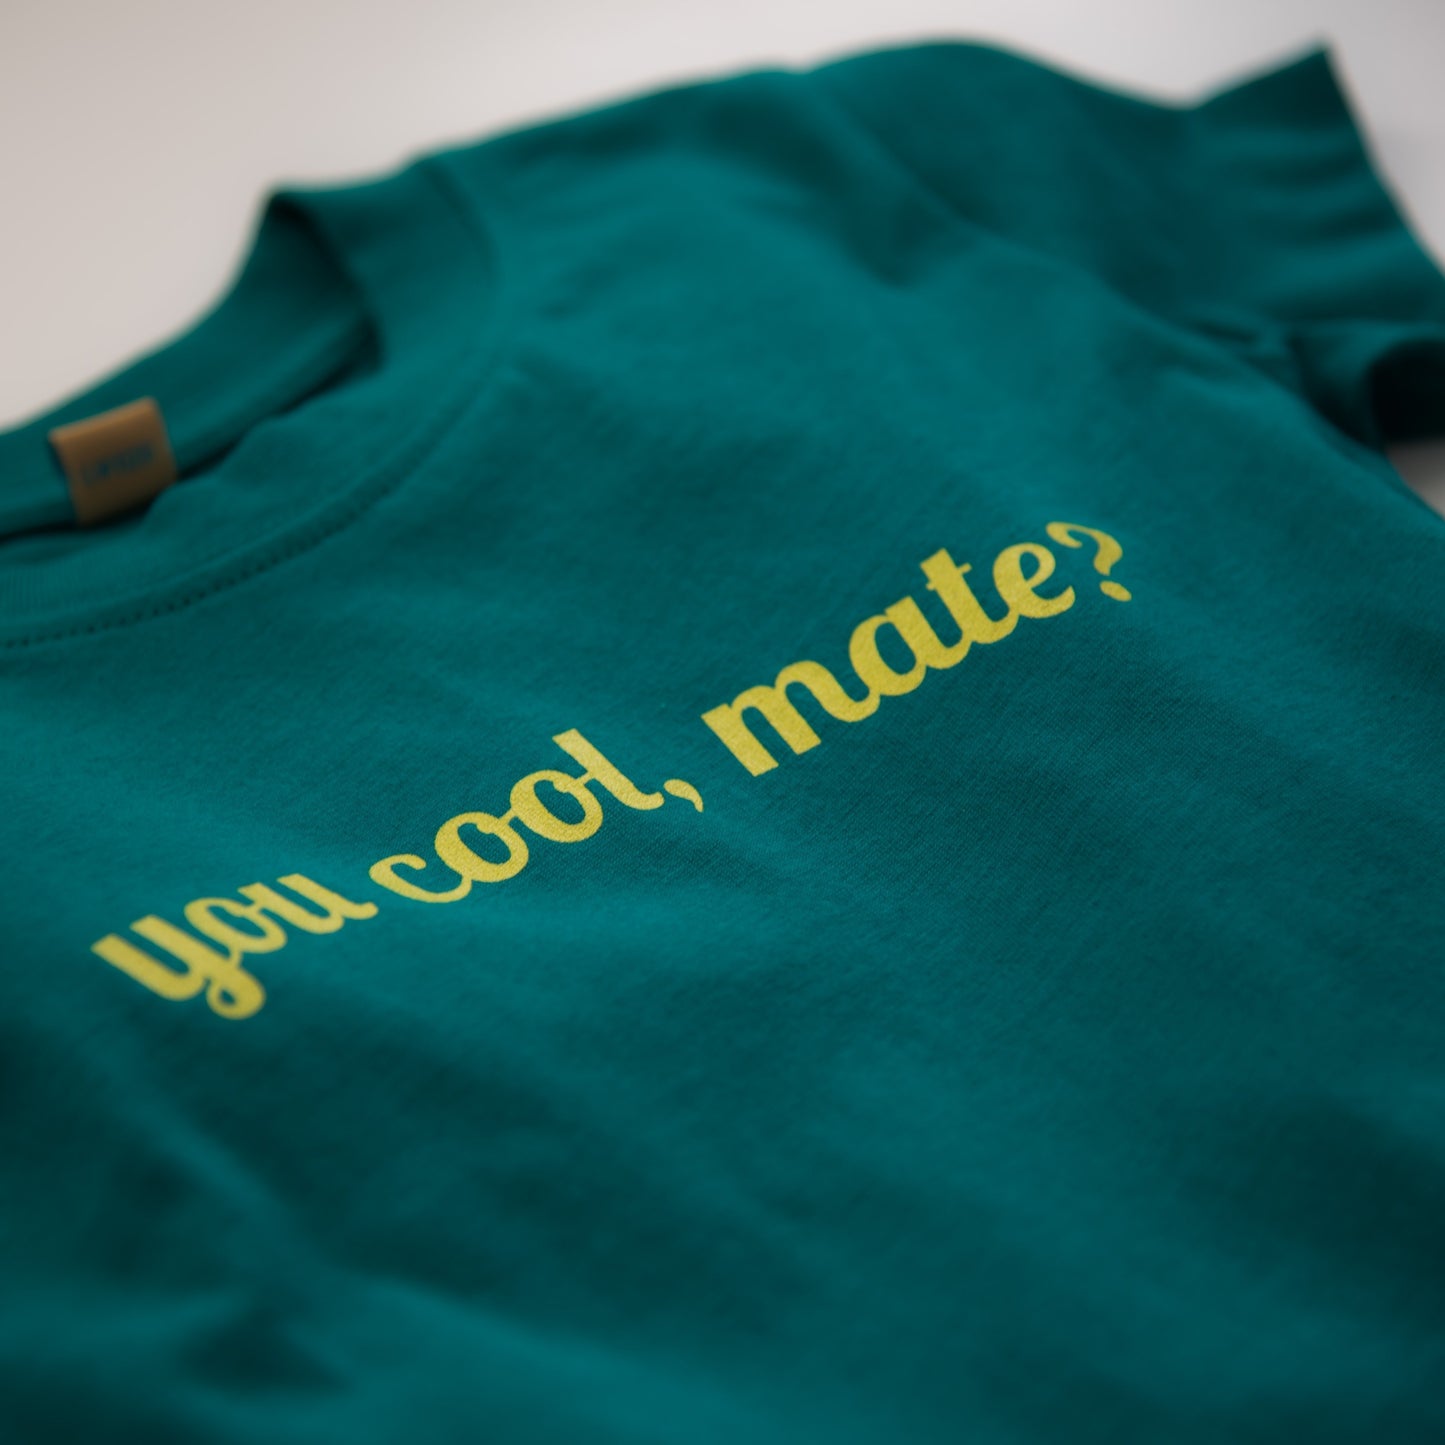 YOU COOL, MATE? - Short Sleeve Toddler T Shirt - Little Mate Adventures 